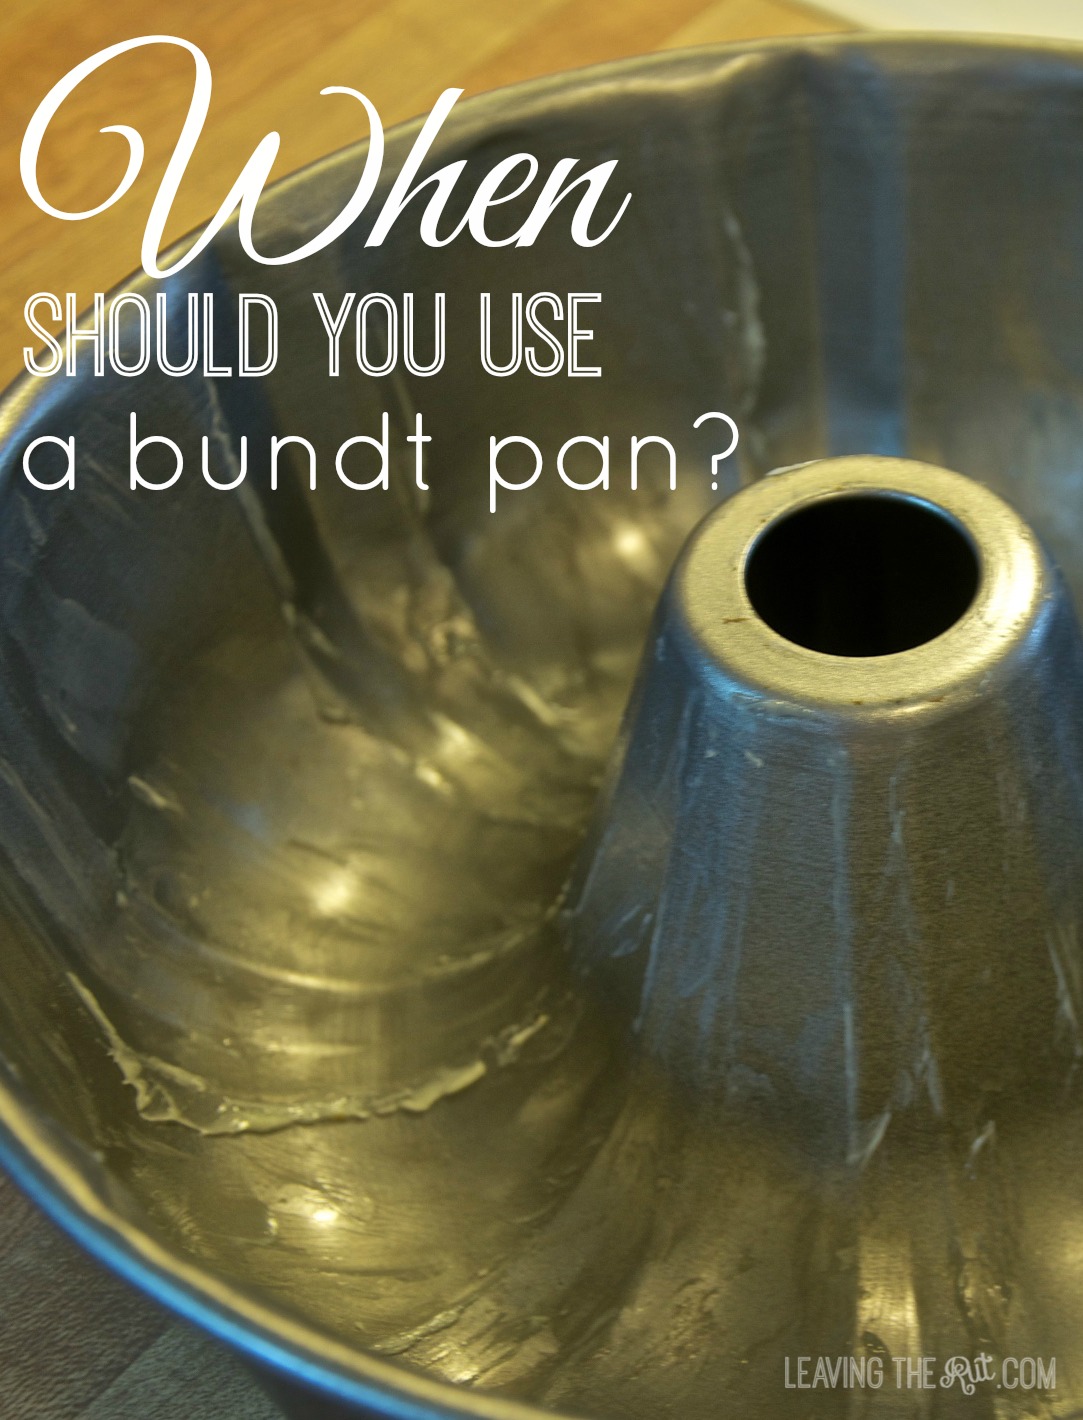 What Is a Bundt Pan?